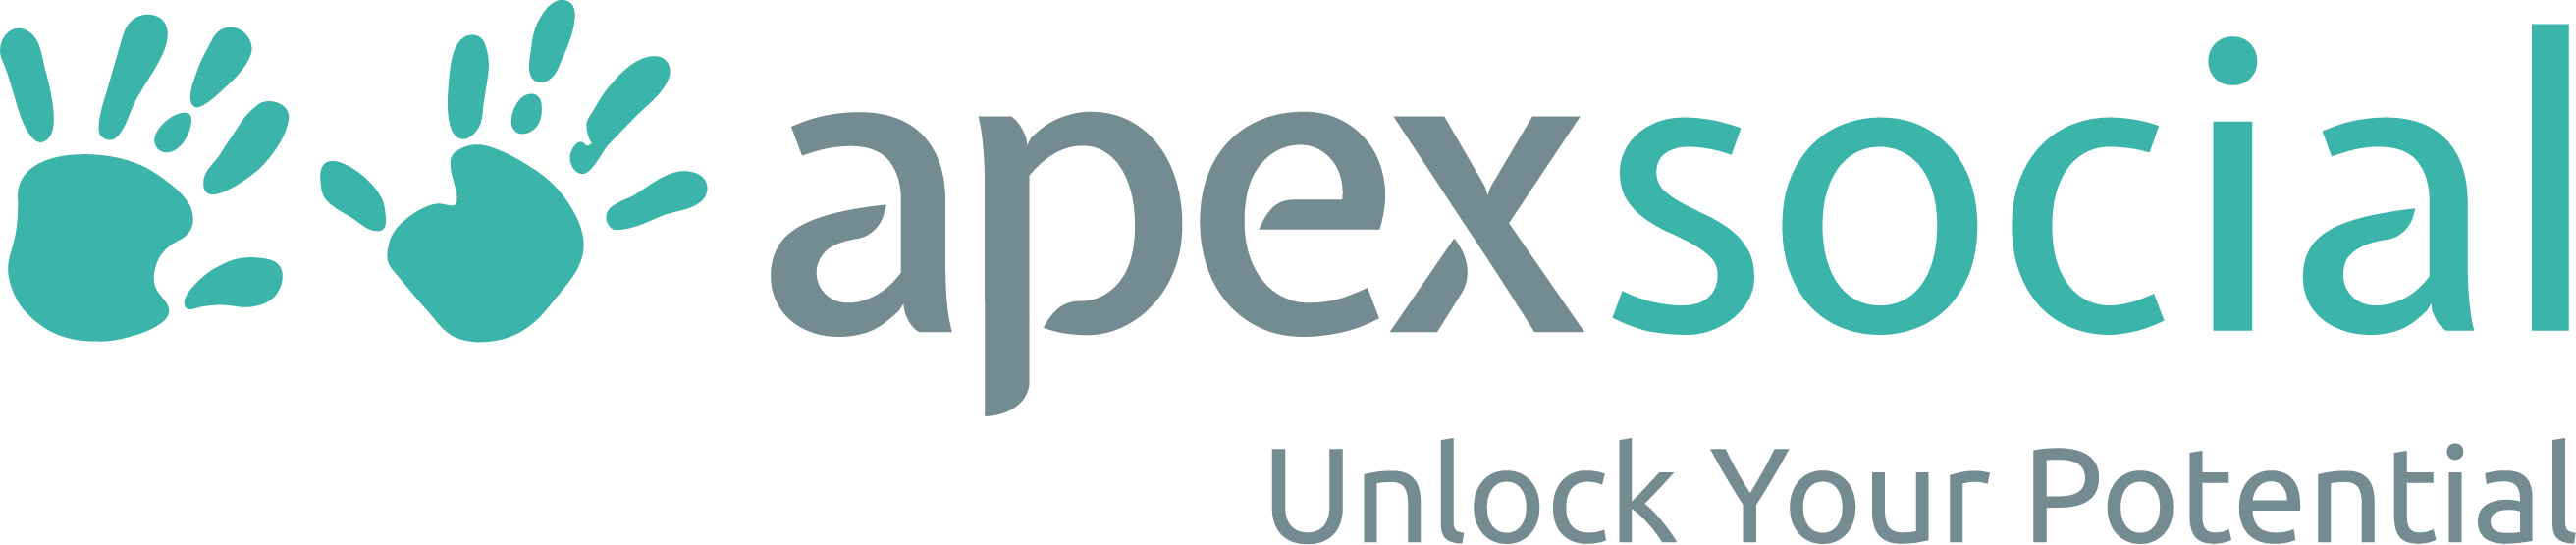 Apex Social Logo